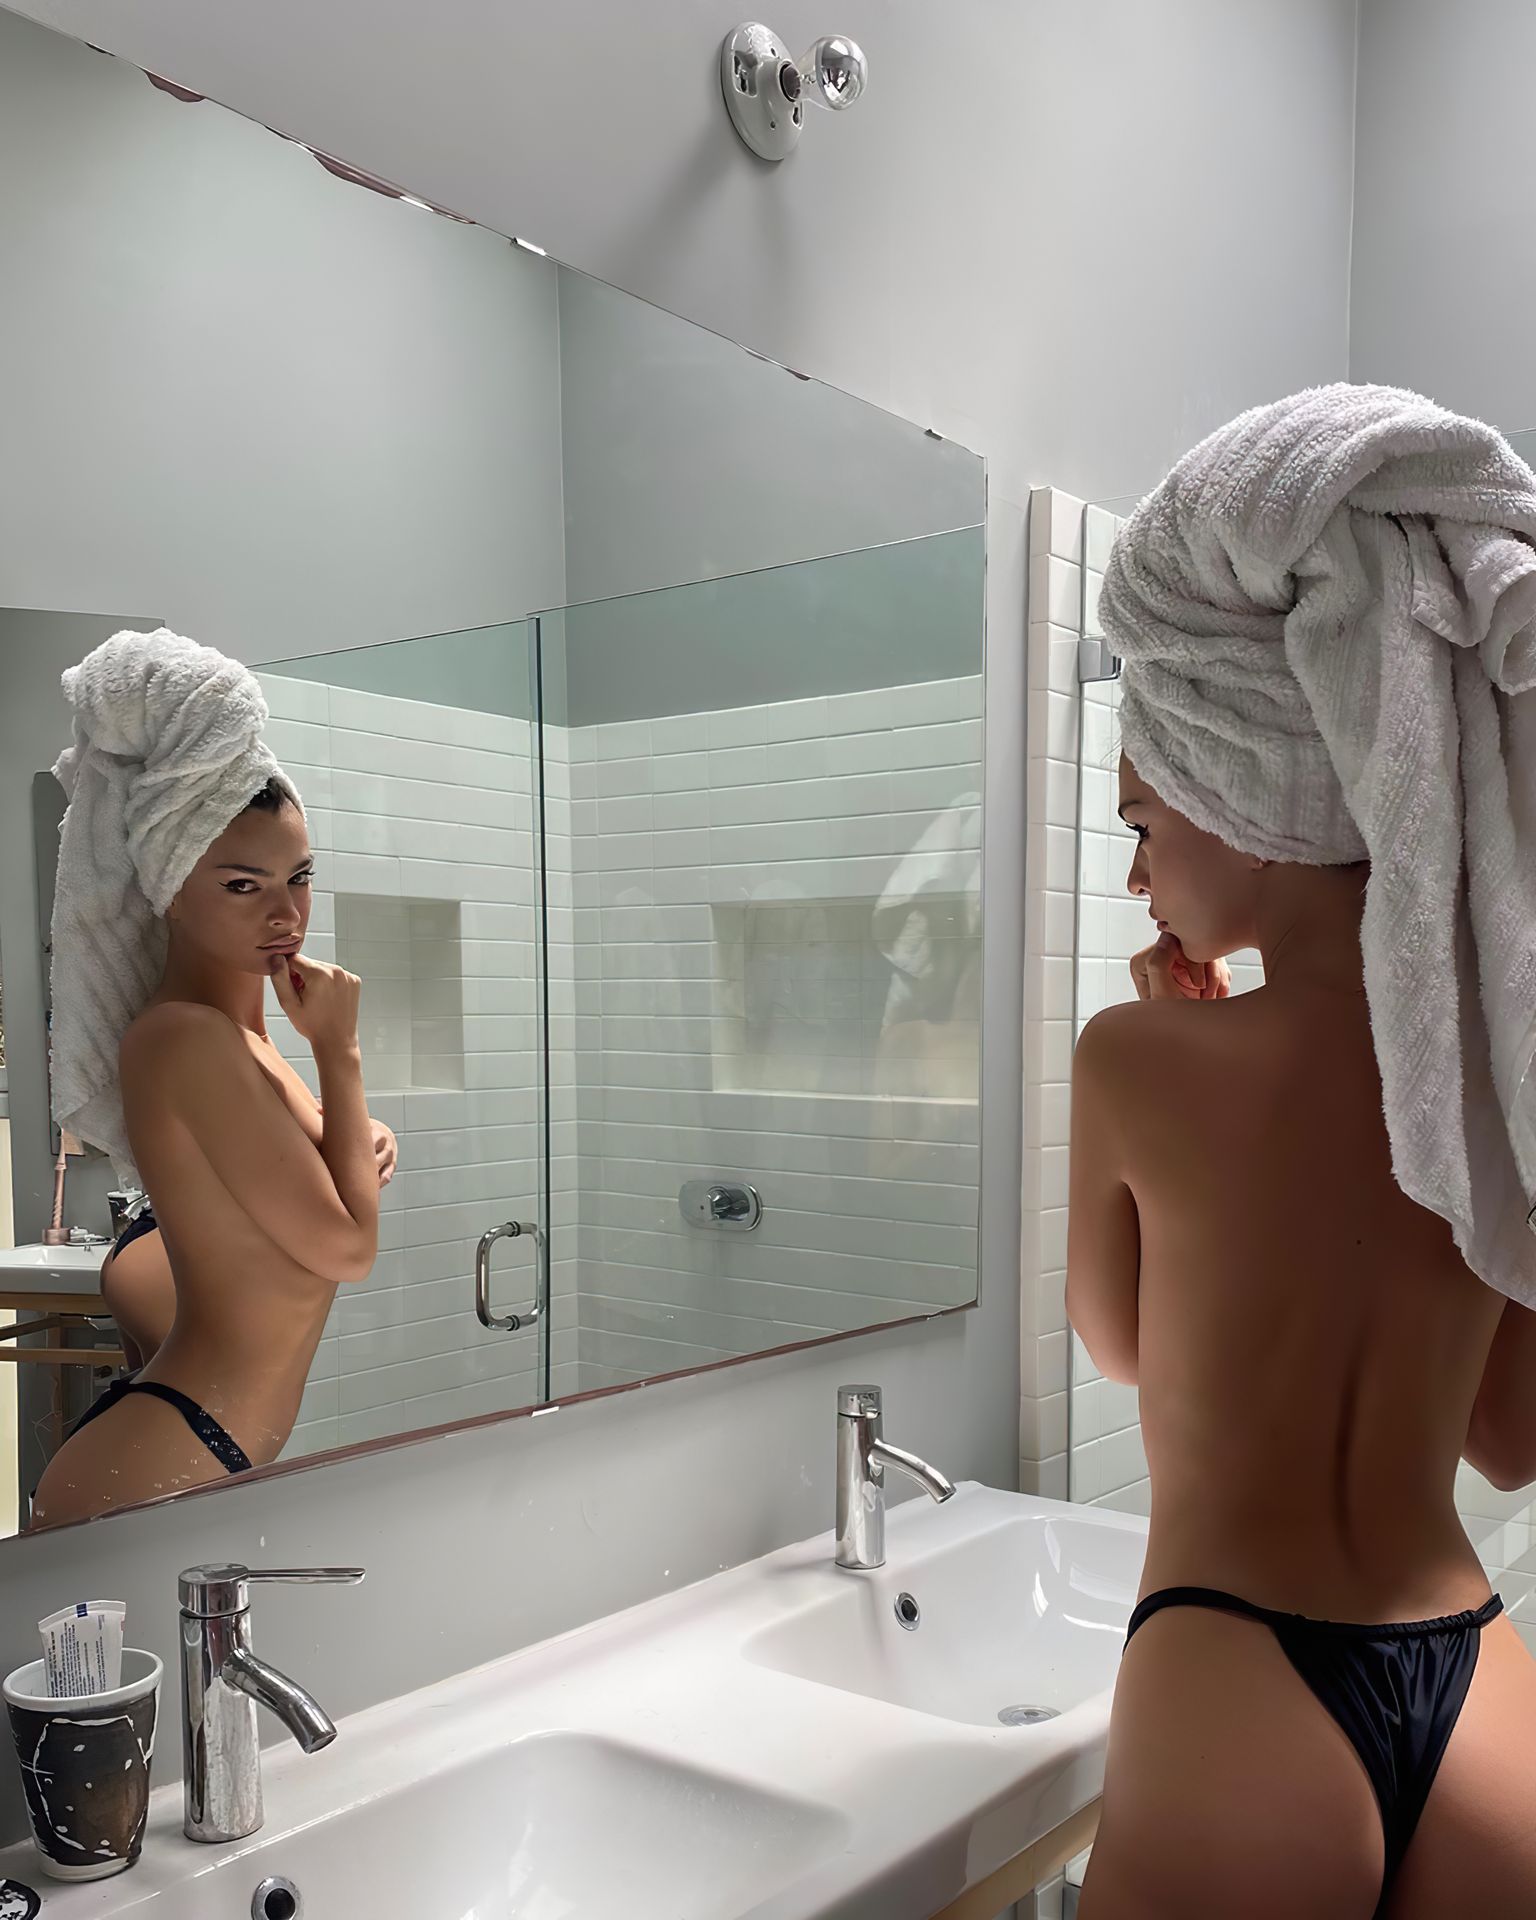 Emily O’Hara Ratajkowski Topless (2 Hot Photos)